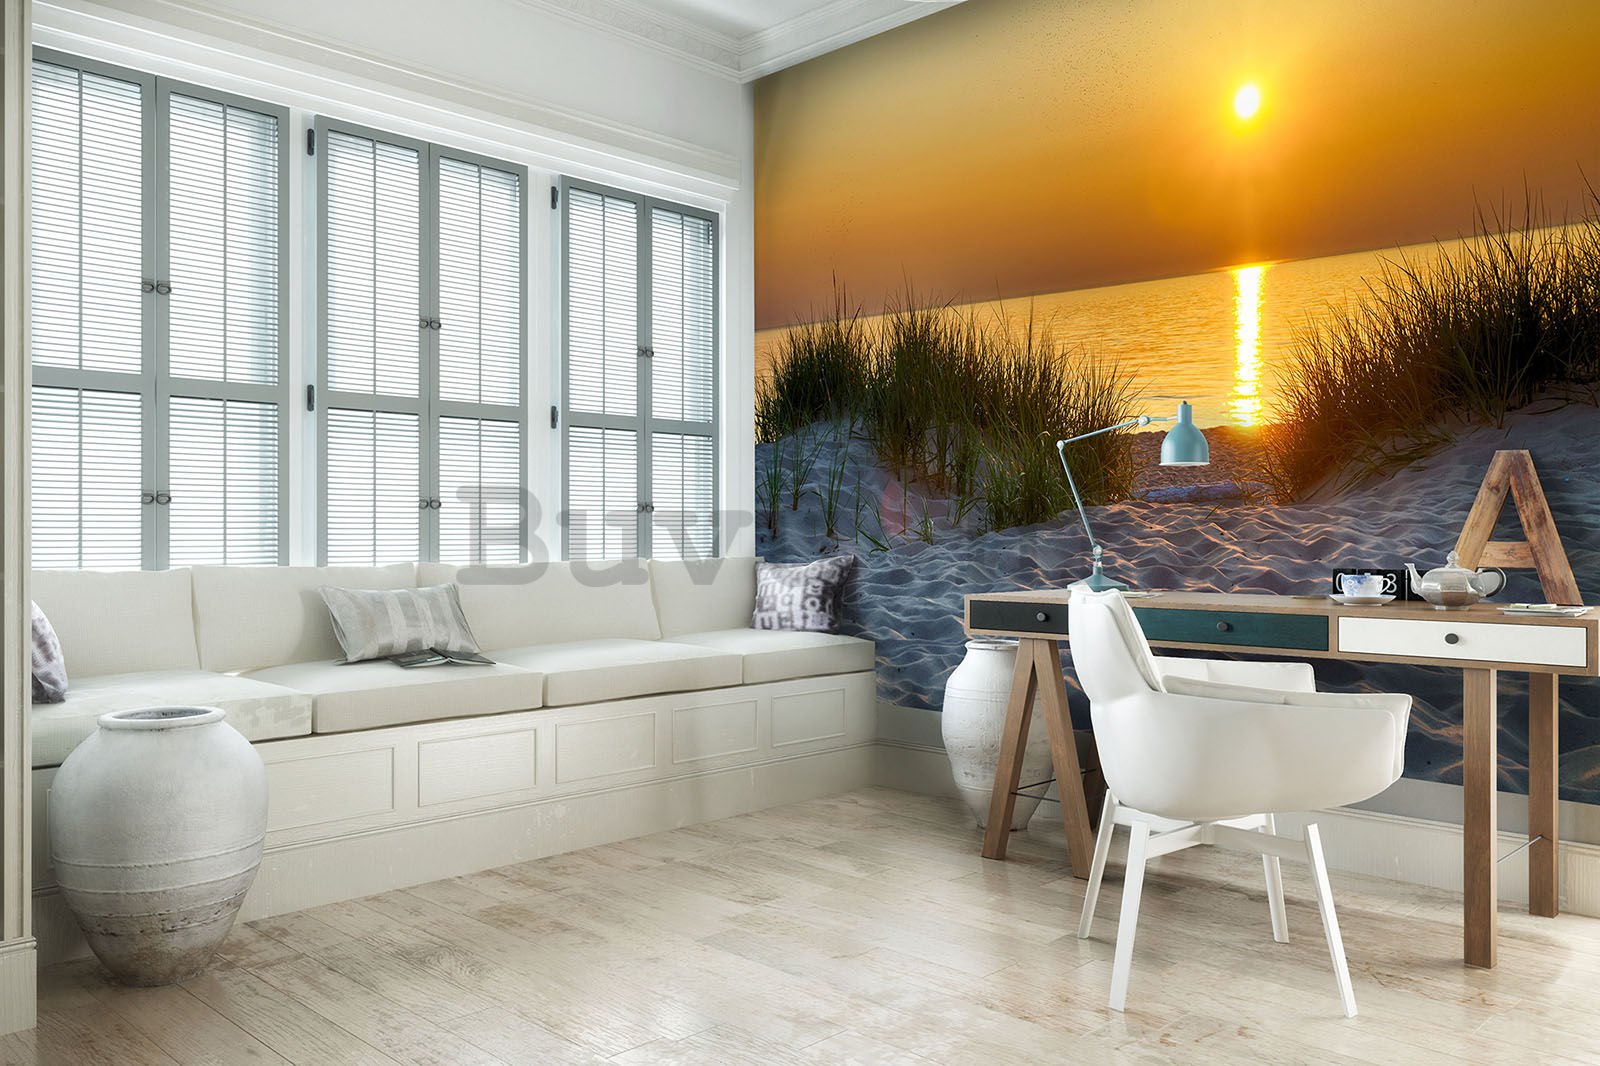 Vlies foto tapeta: Zalazak sunca na plaži (5) - 368x254 cm